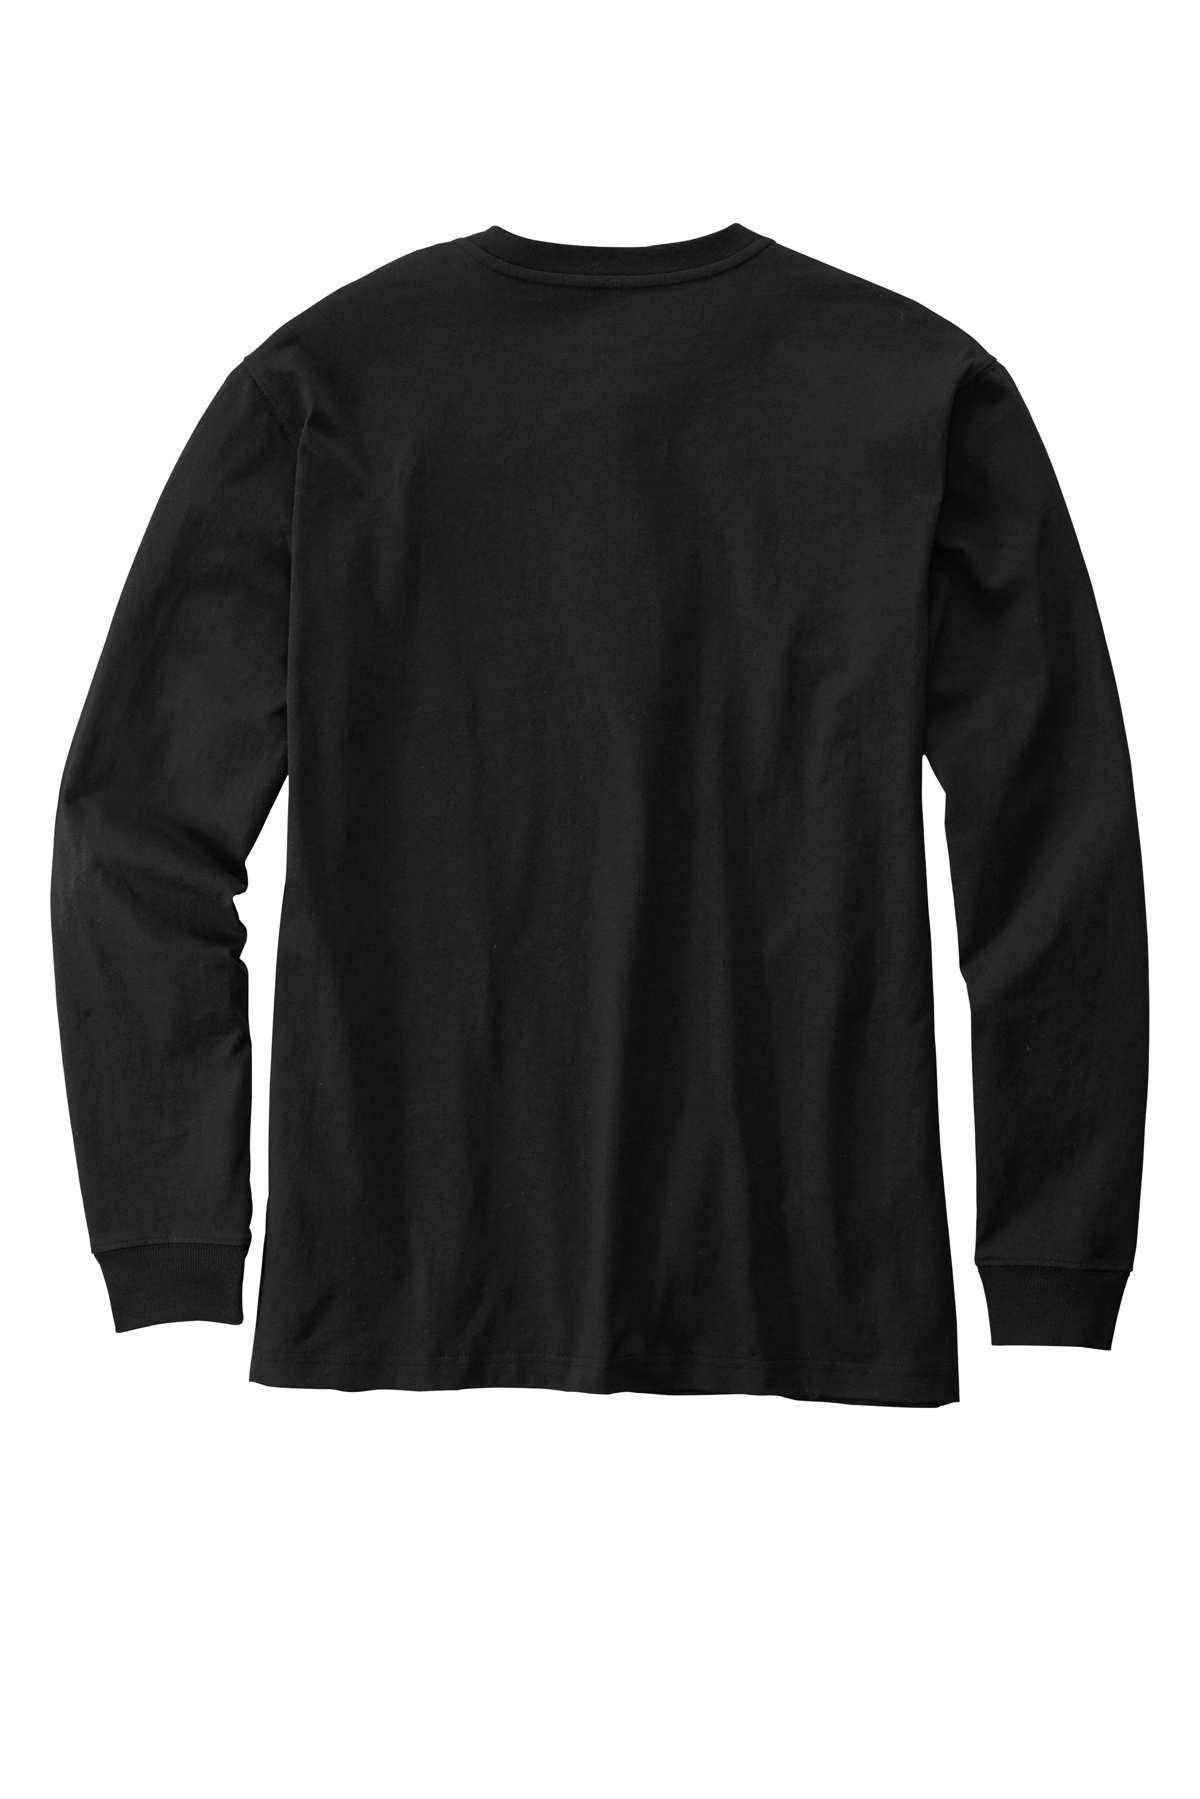 Carhartt Long Sleeve Henley T-Shirt Product SanMar | 